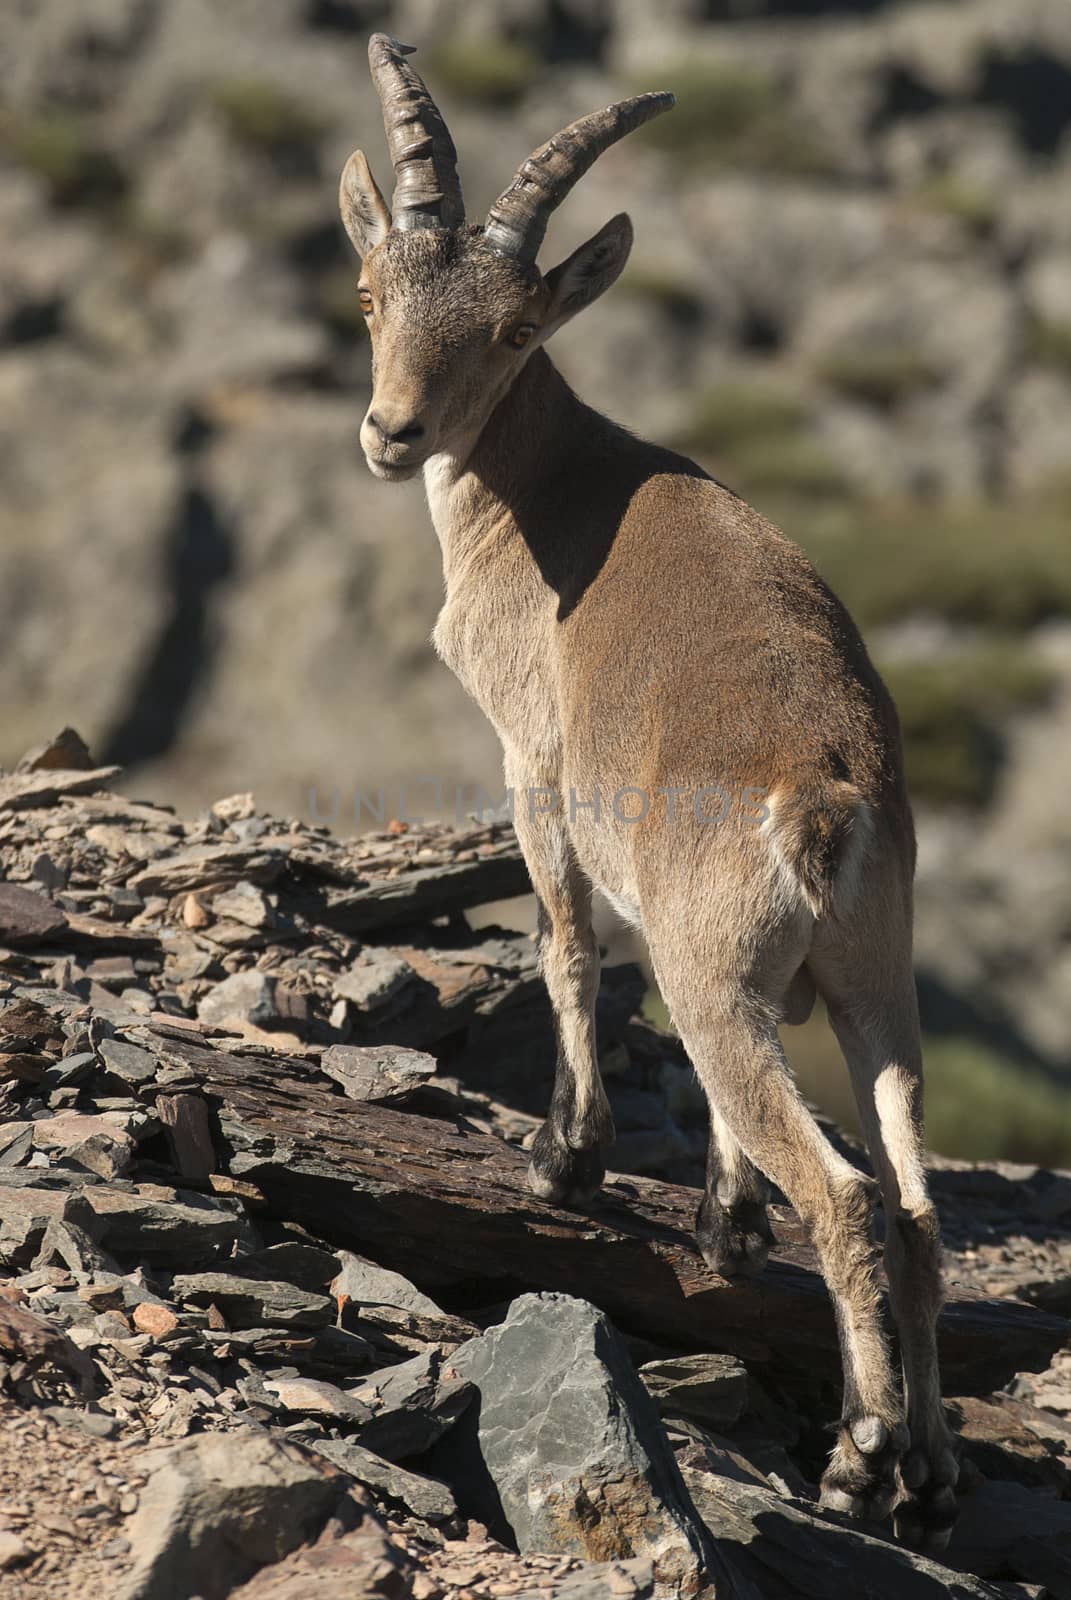 Iberian ibex, Capra pyrenaica, Iberian Ibex, Spain, on top of th by jalonsohu@gmail.com